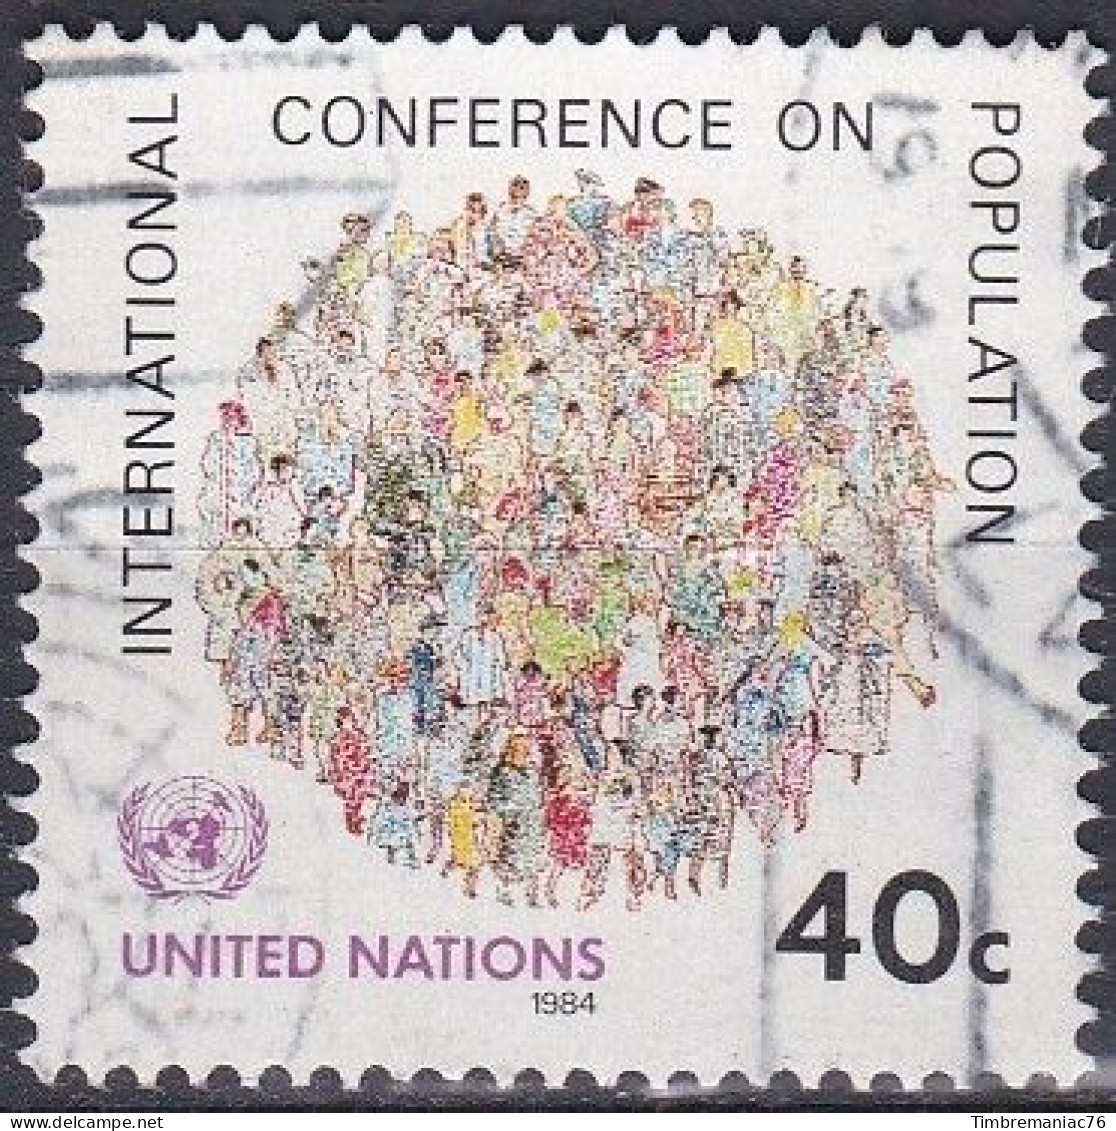 Nations Unies N.Y. 1984 YT 409 Oblitéré - Neufs